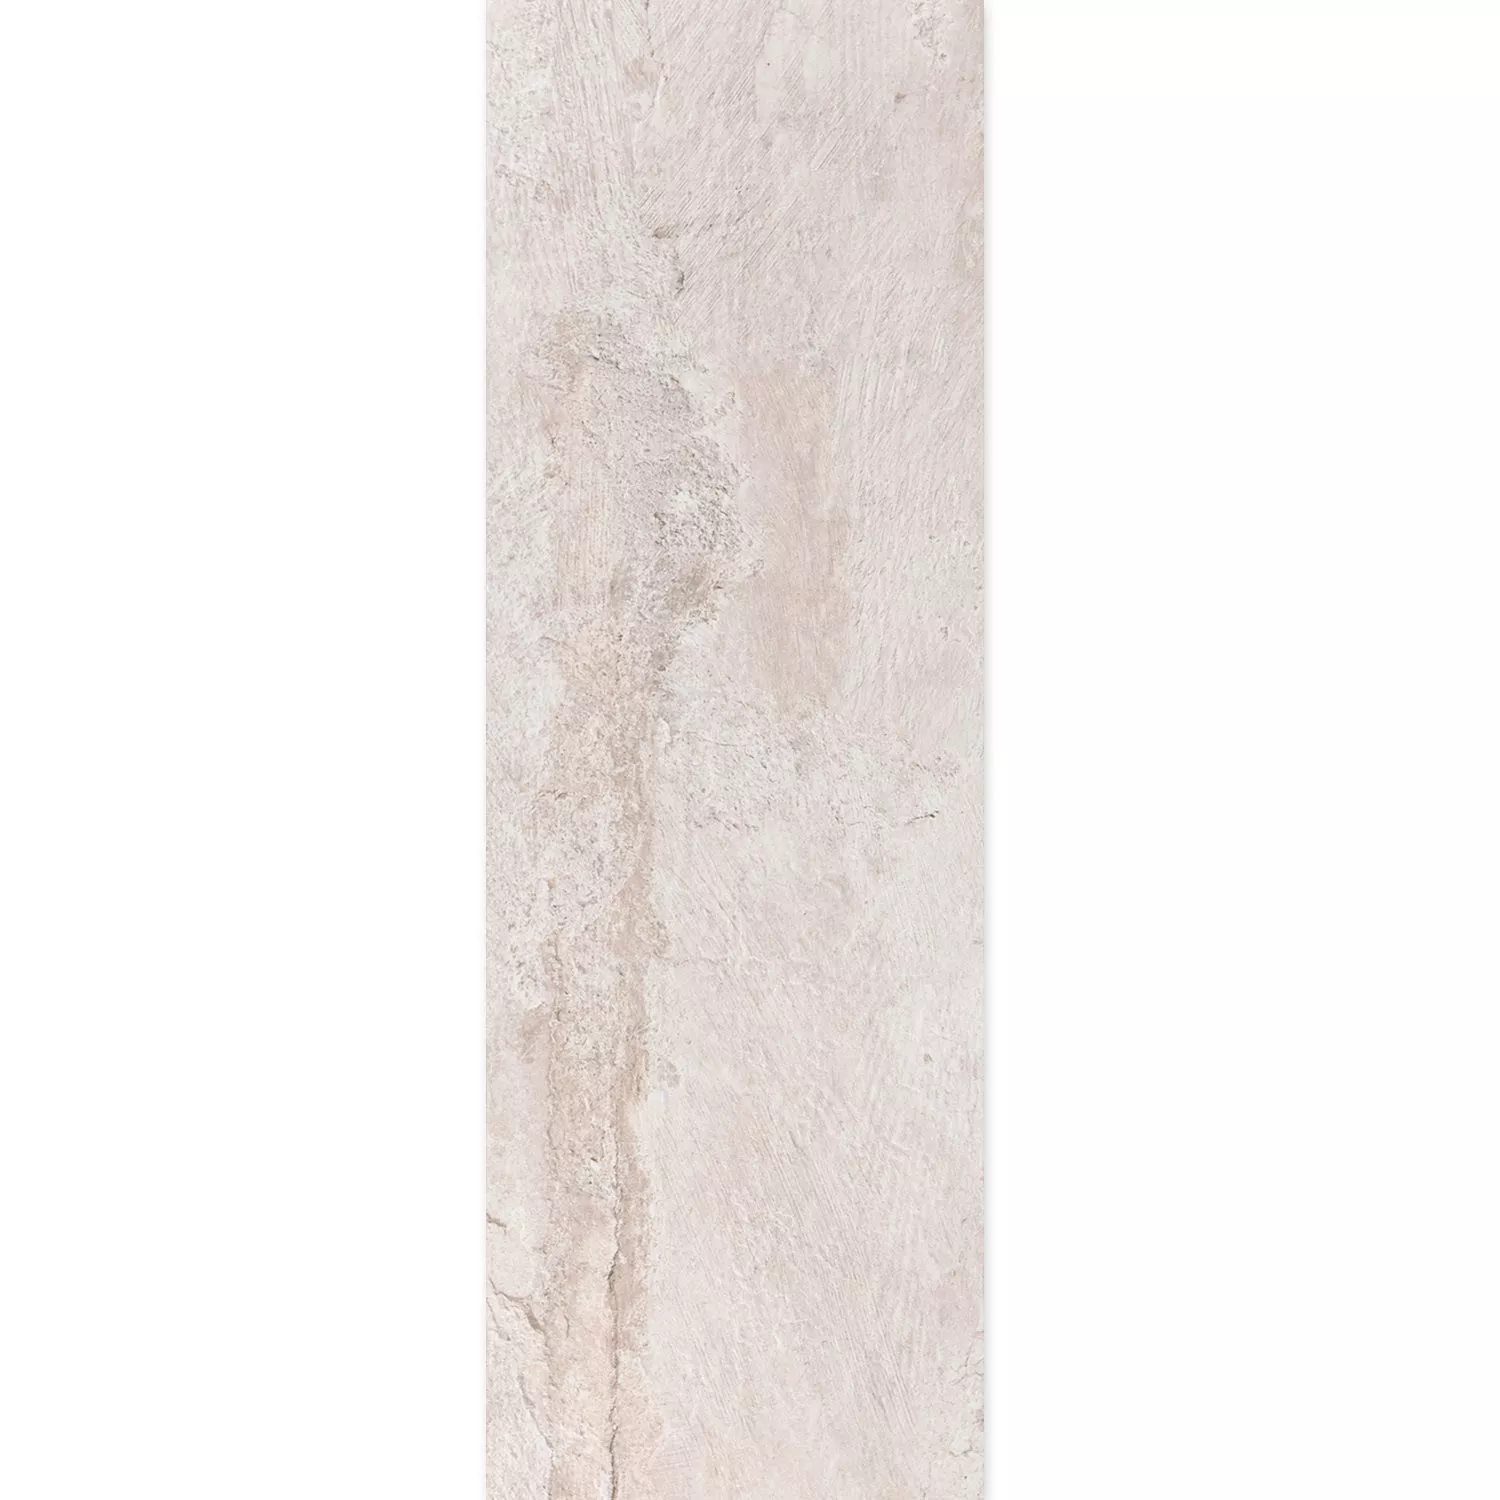 Carrelage Sol Et Mur Aspect Pierre Polaris R10 Blanc 30x120cm